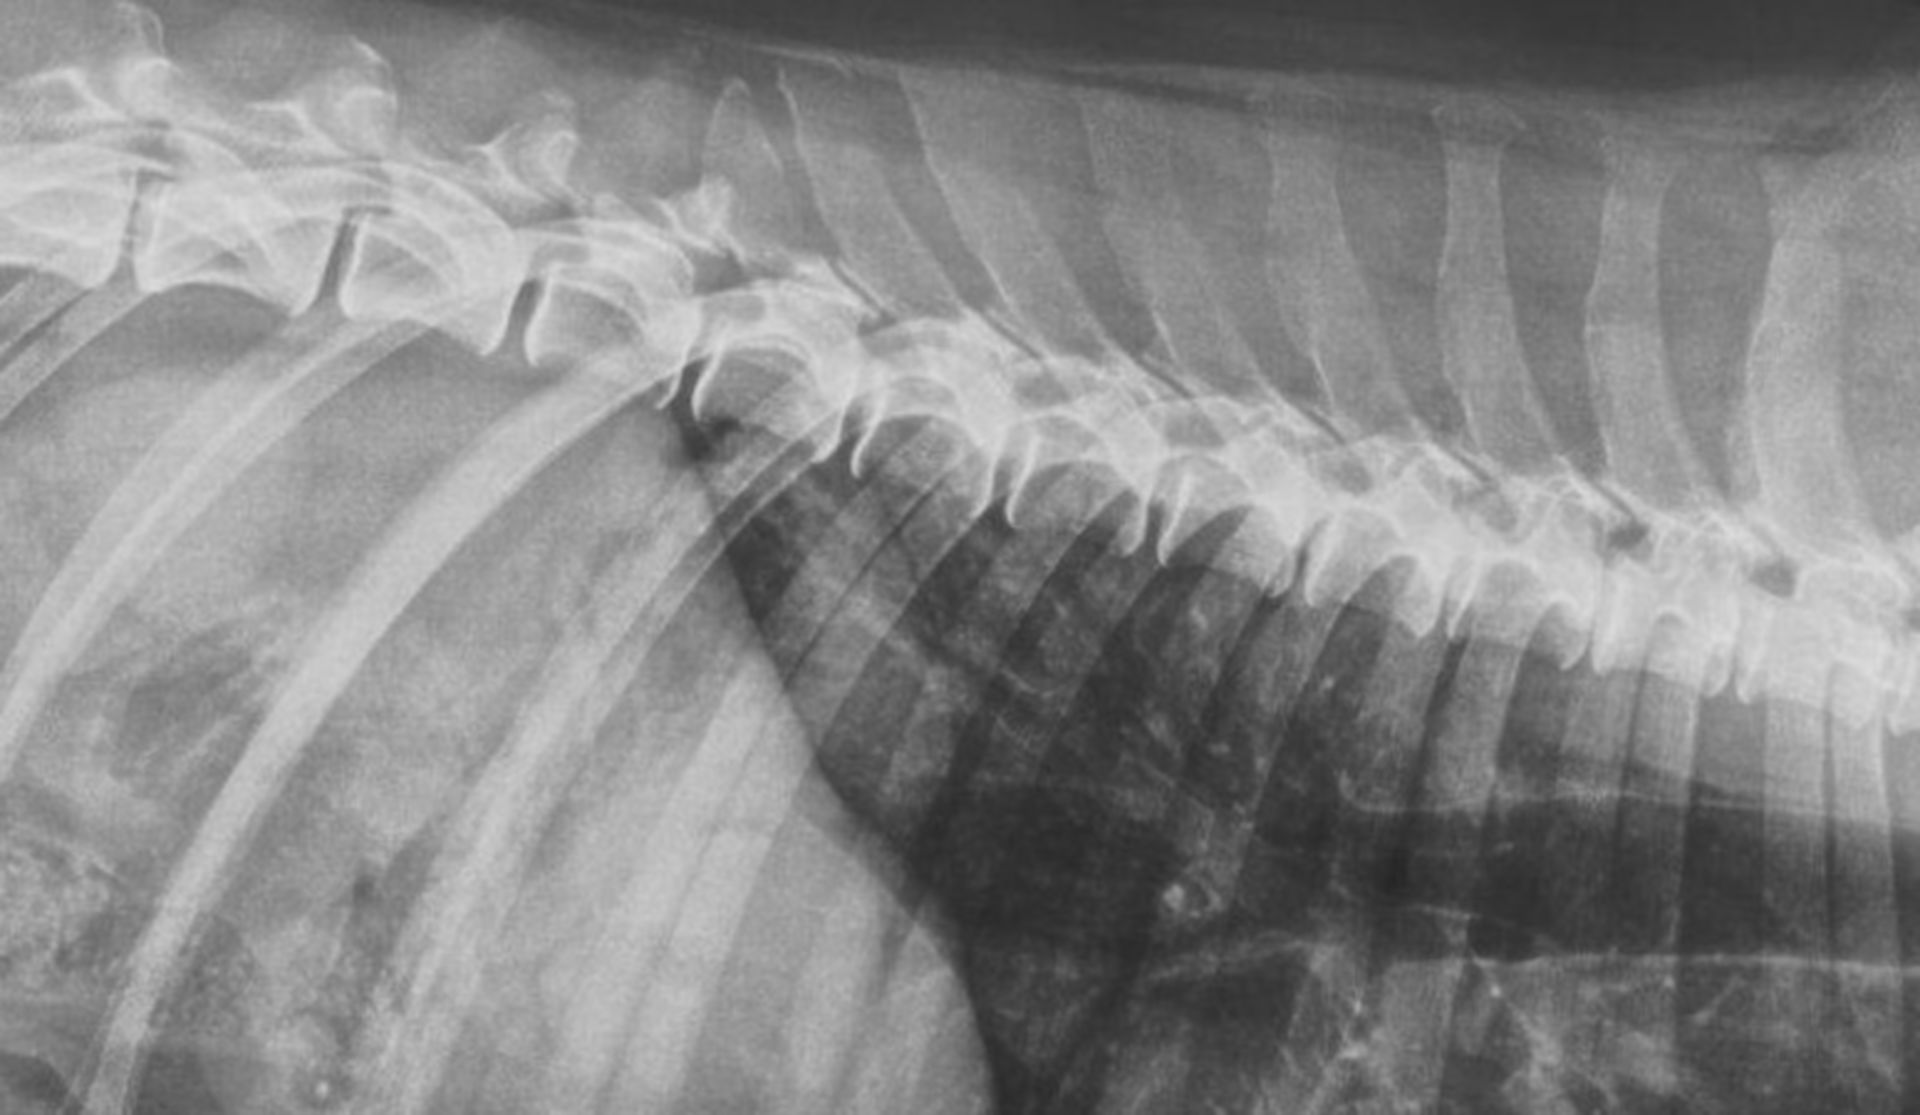 Veterinary medicine: X-ray